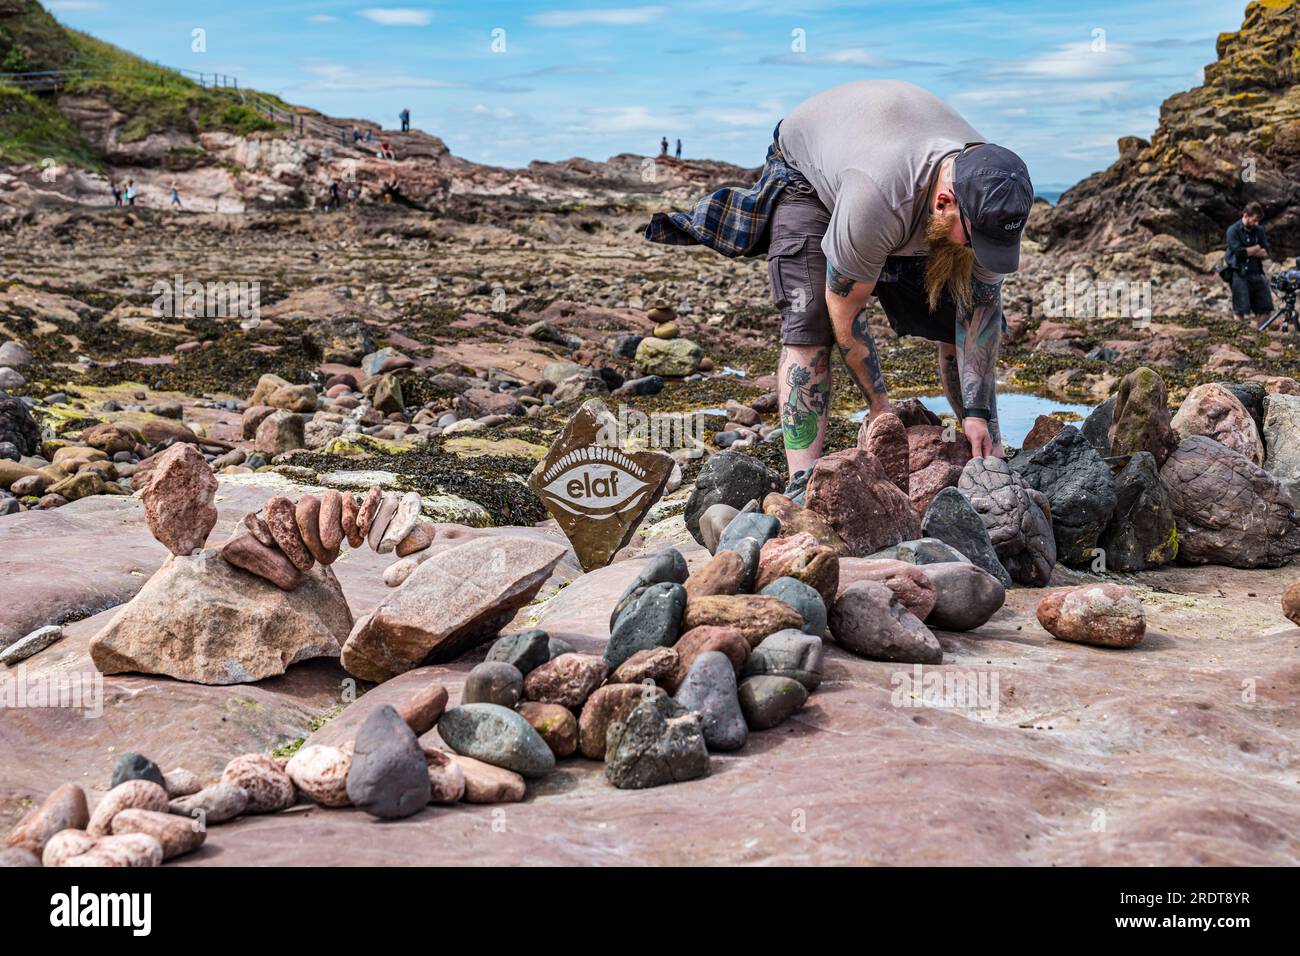 Arron Tierney Balancing Stones on Beach, European Stone Stacking Championship and Land Art Festival, Dunbar, East Lothian, Scozia, Regno Unito Foto Stock